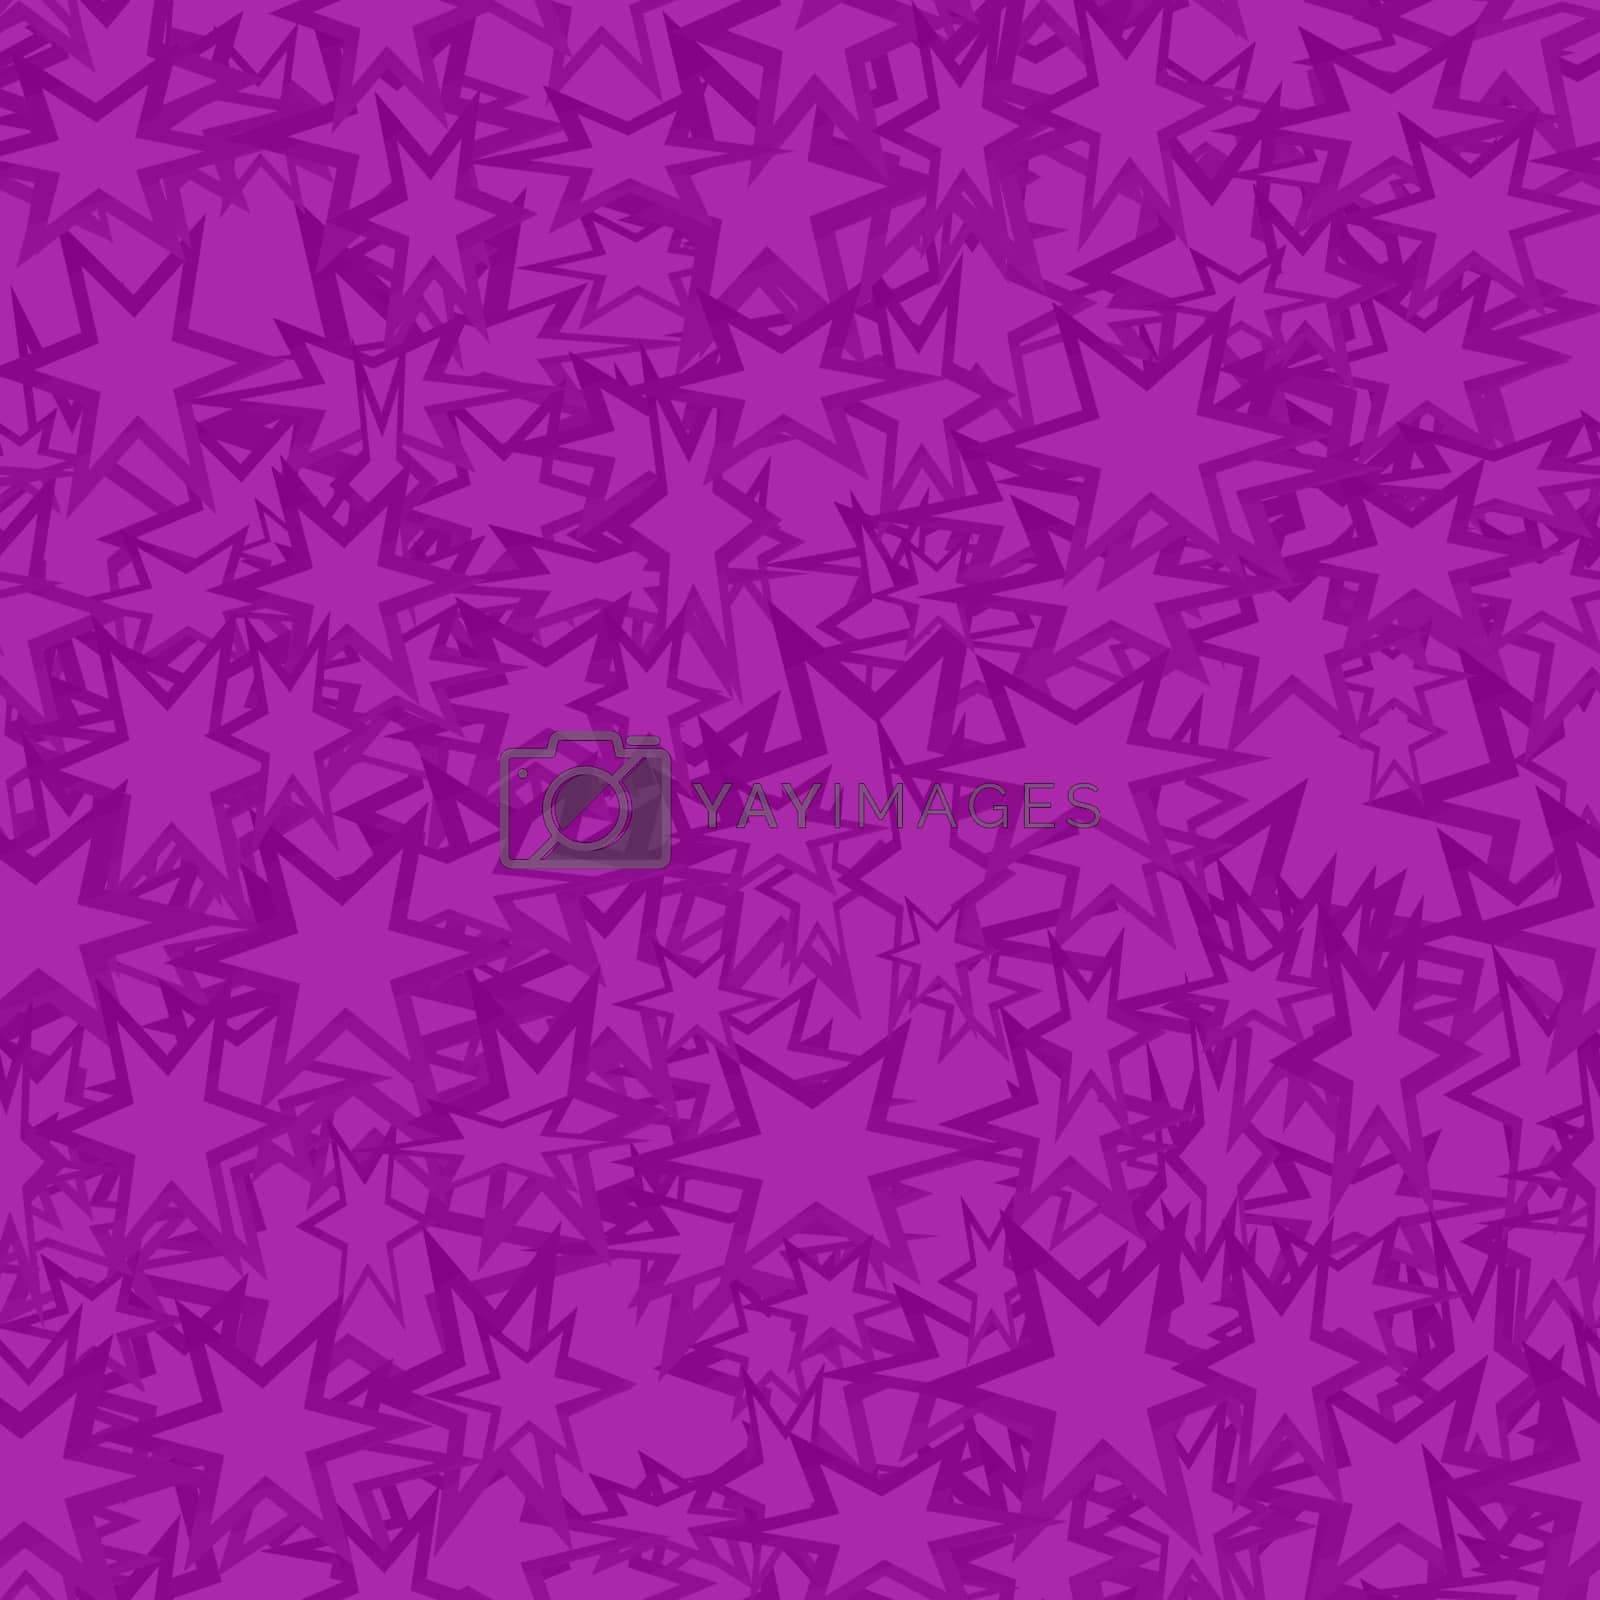 Royalty free image of Purple seamless star pattern background  by davidzydd